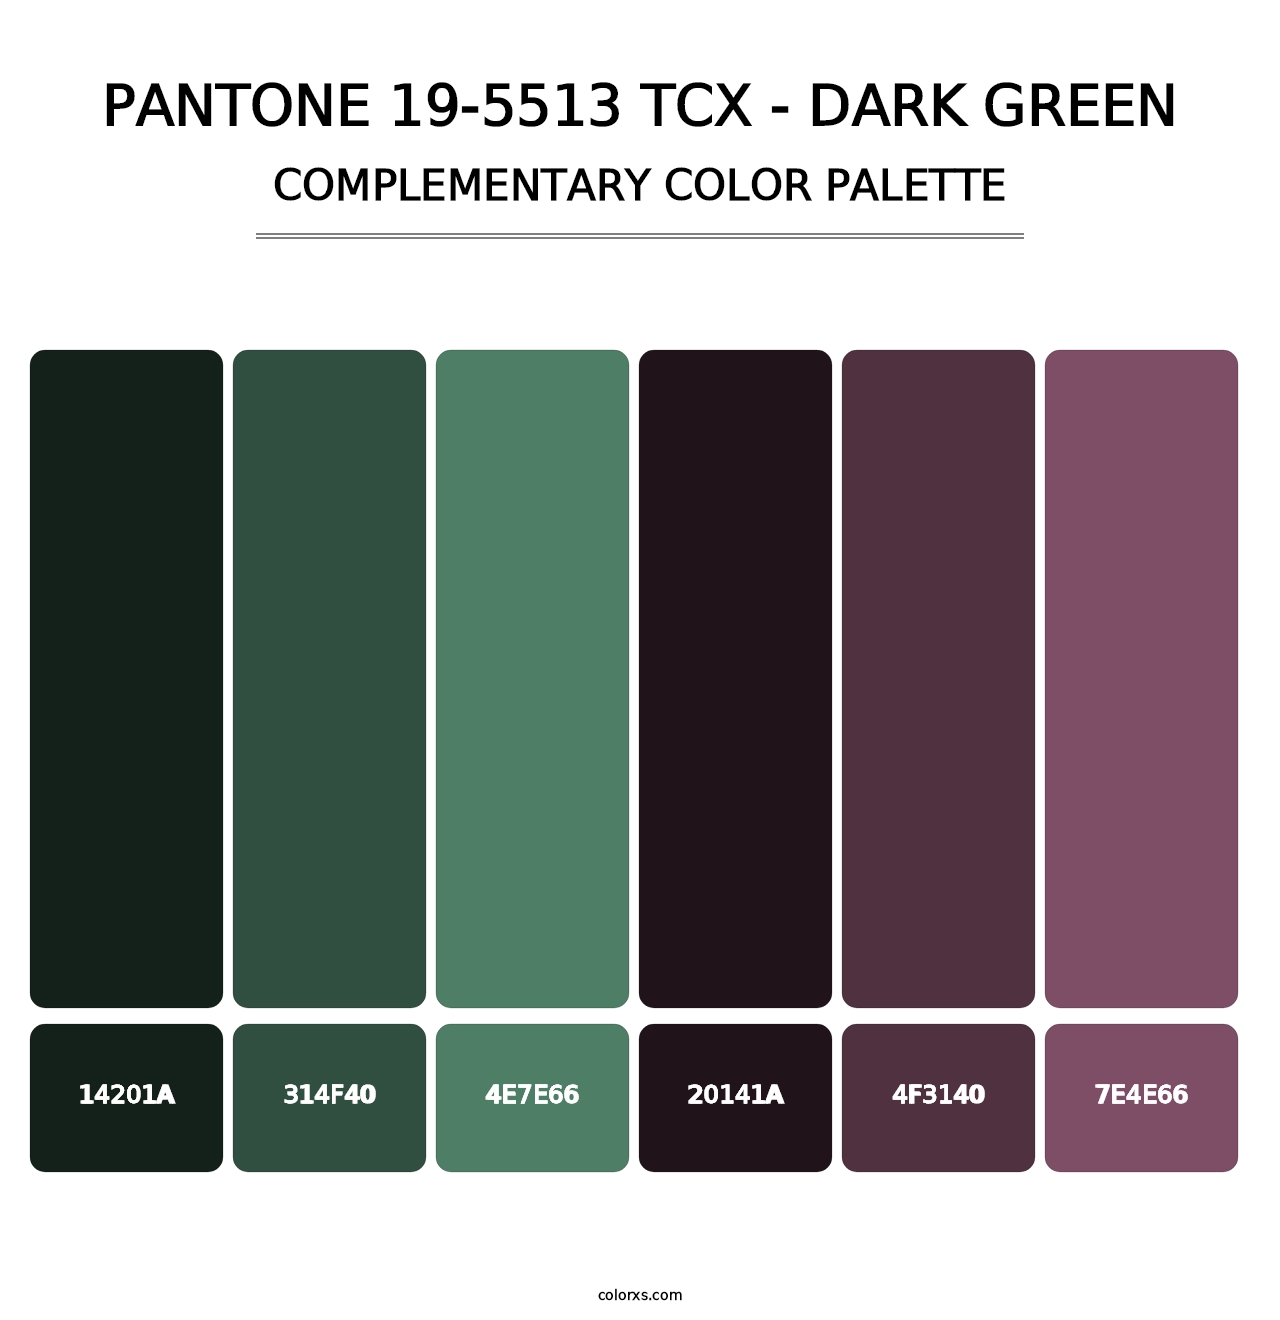 PANTONE 19-5513 TCX - Dark Green - Complementary Color Palette